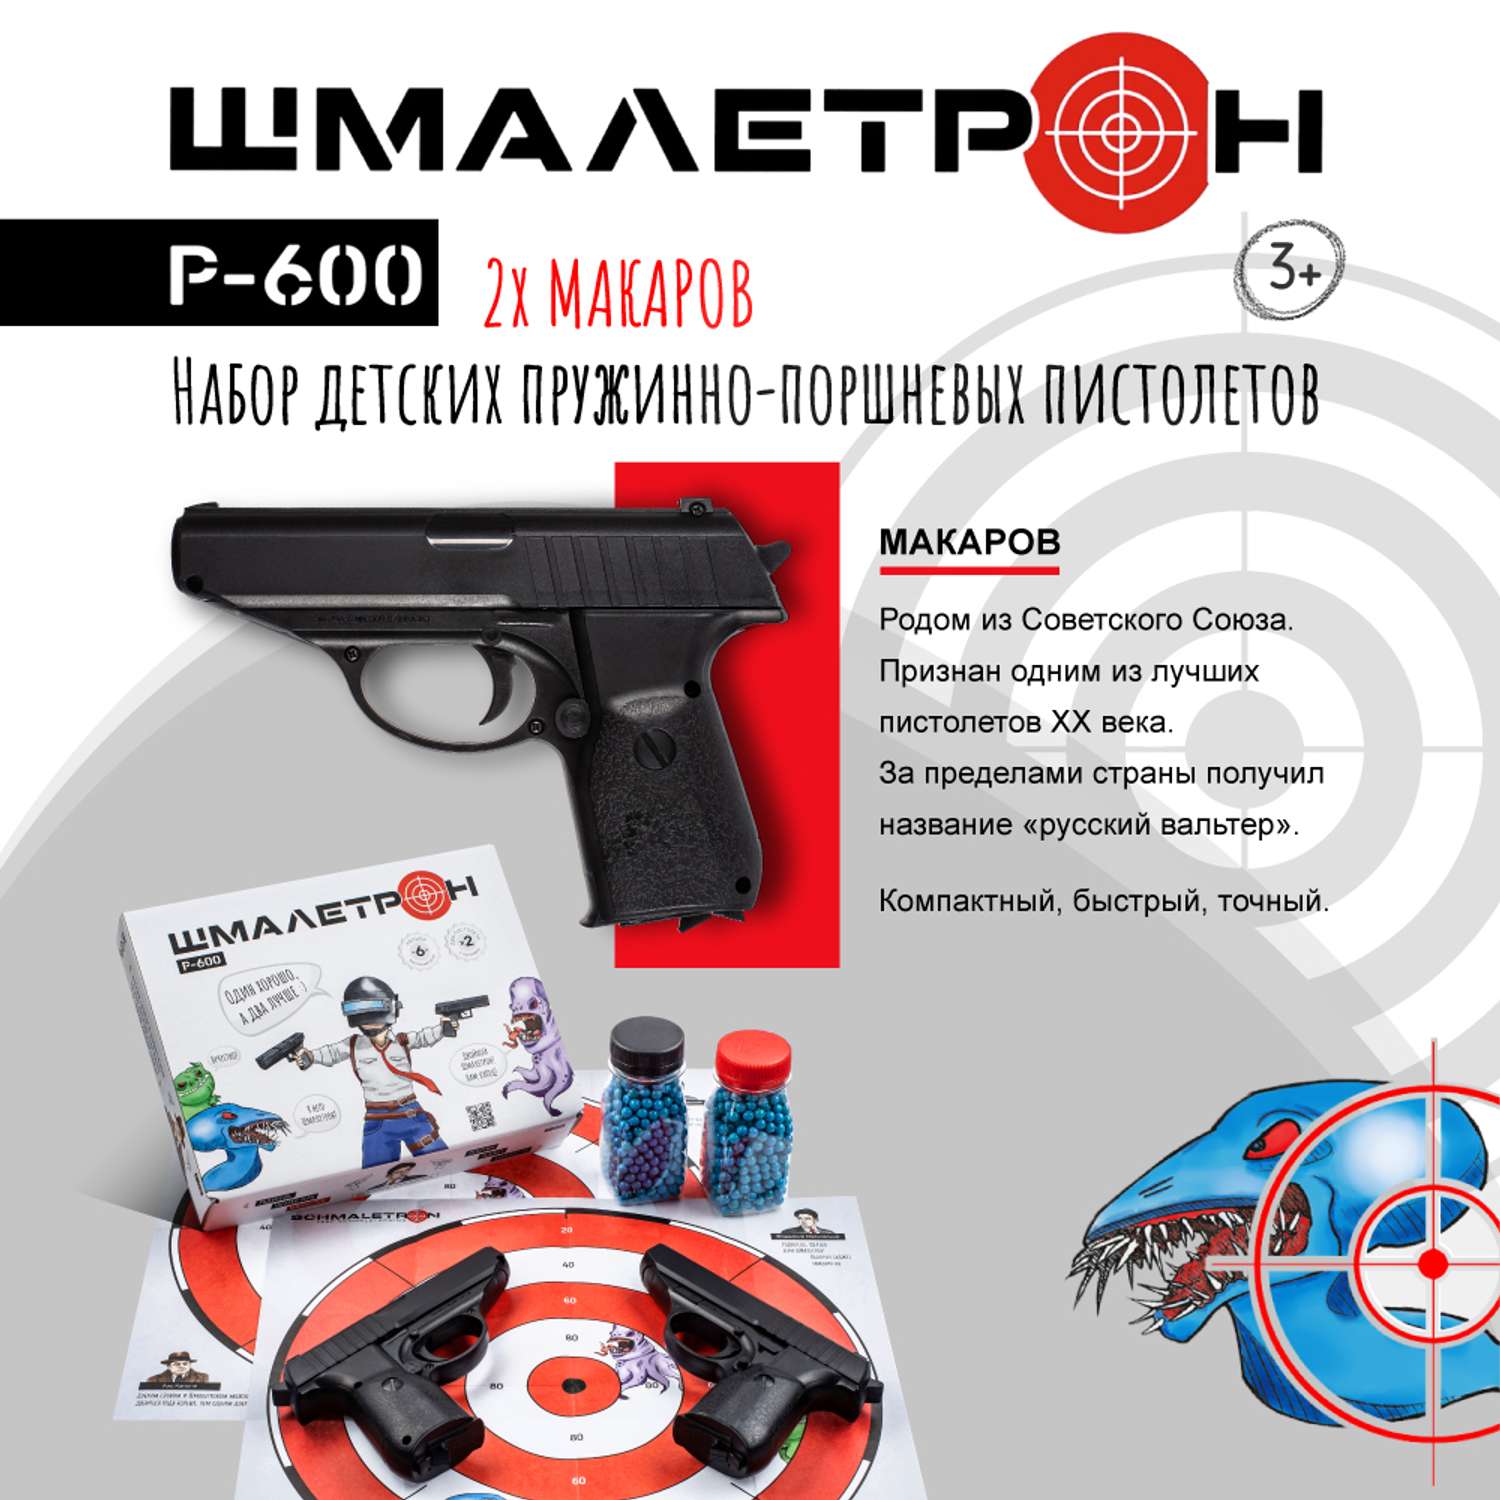 Игрушечное оружие Шмалетрон ДВА пистолета Макарова с 1000 пулек - фото 3